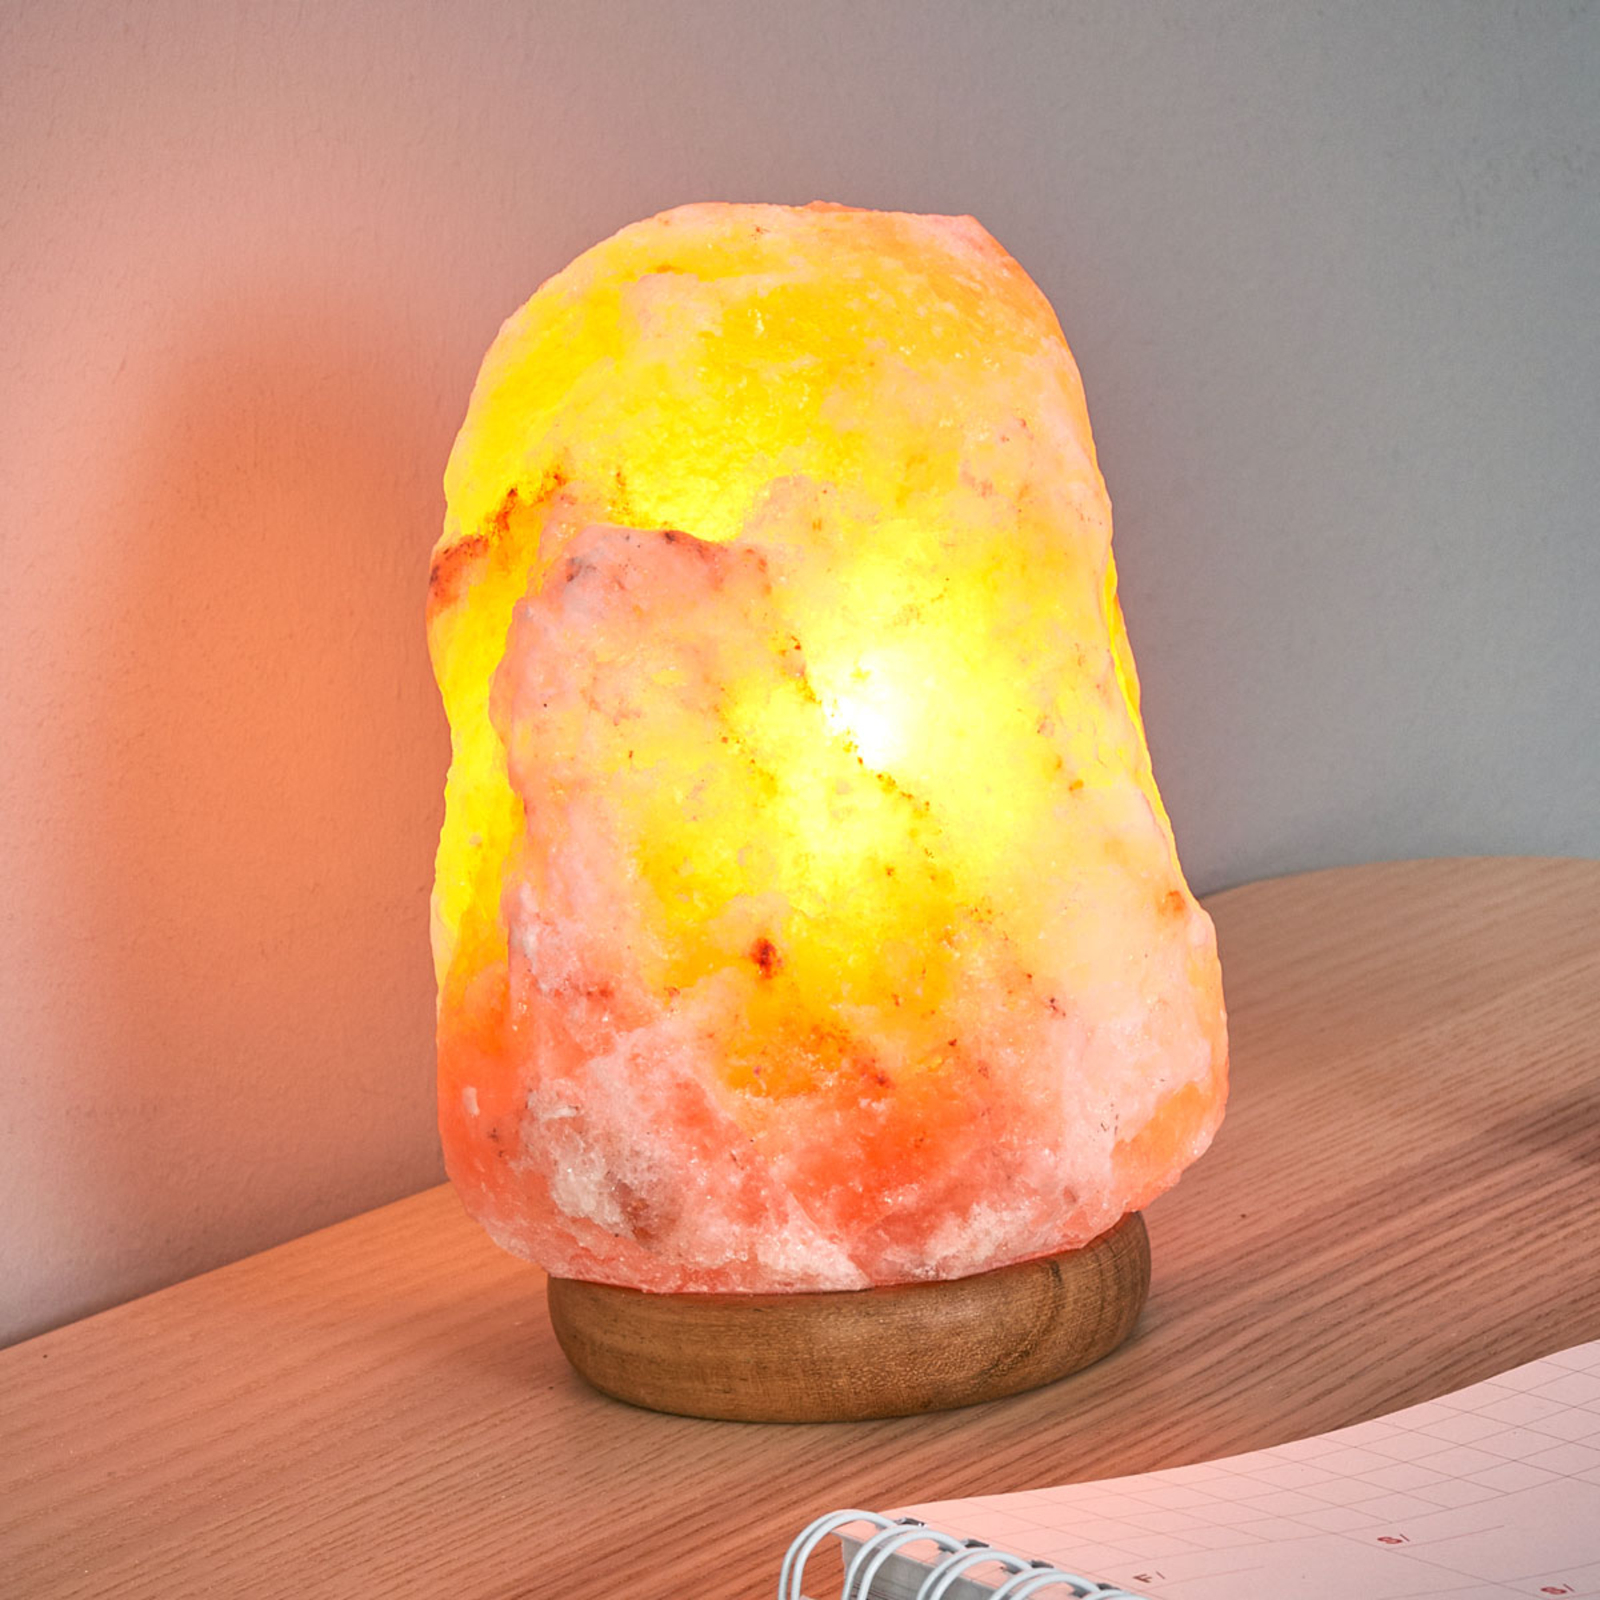 ROCK salt lamp emits feel-good lighting